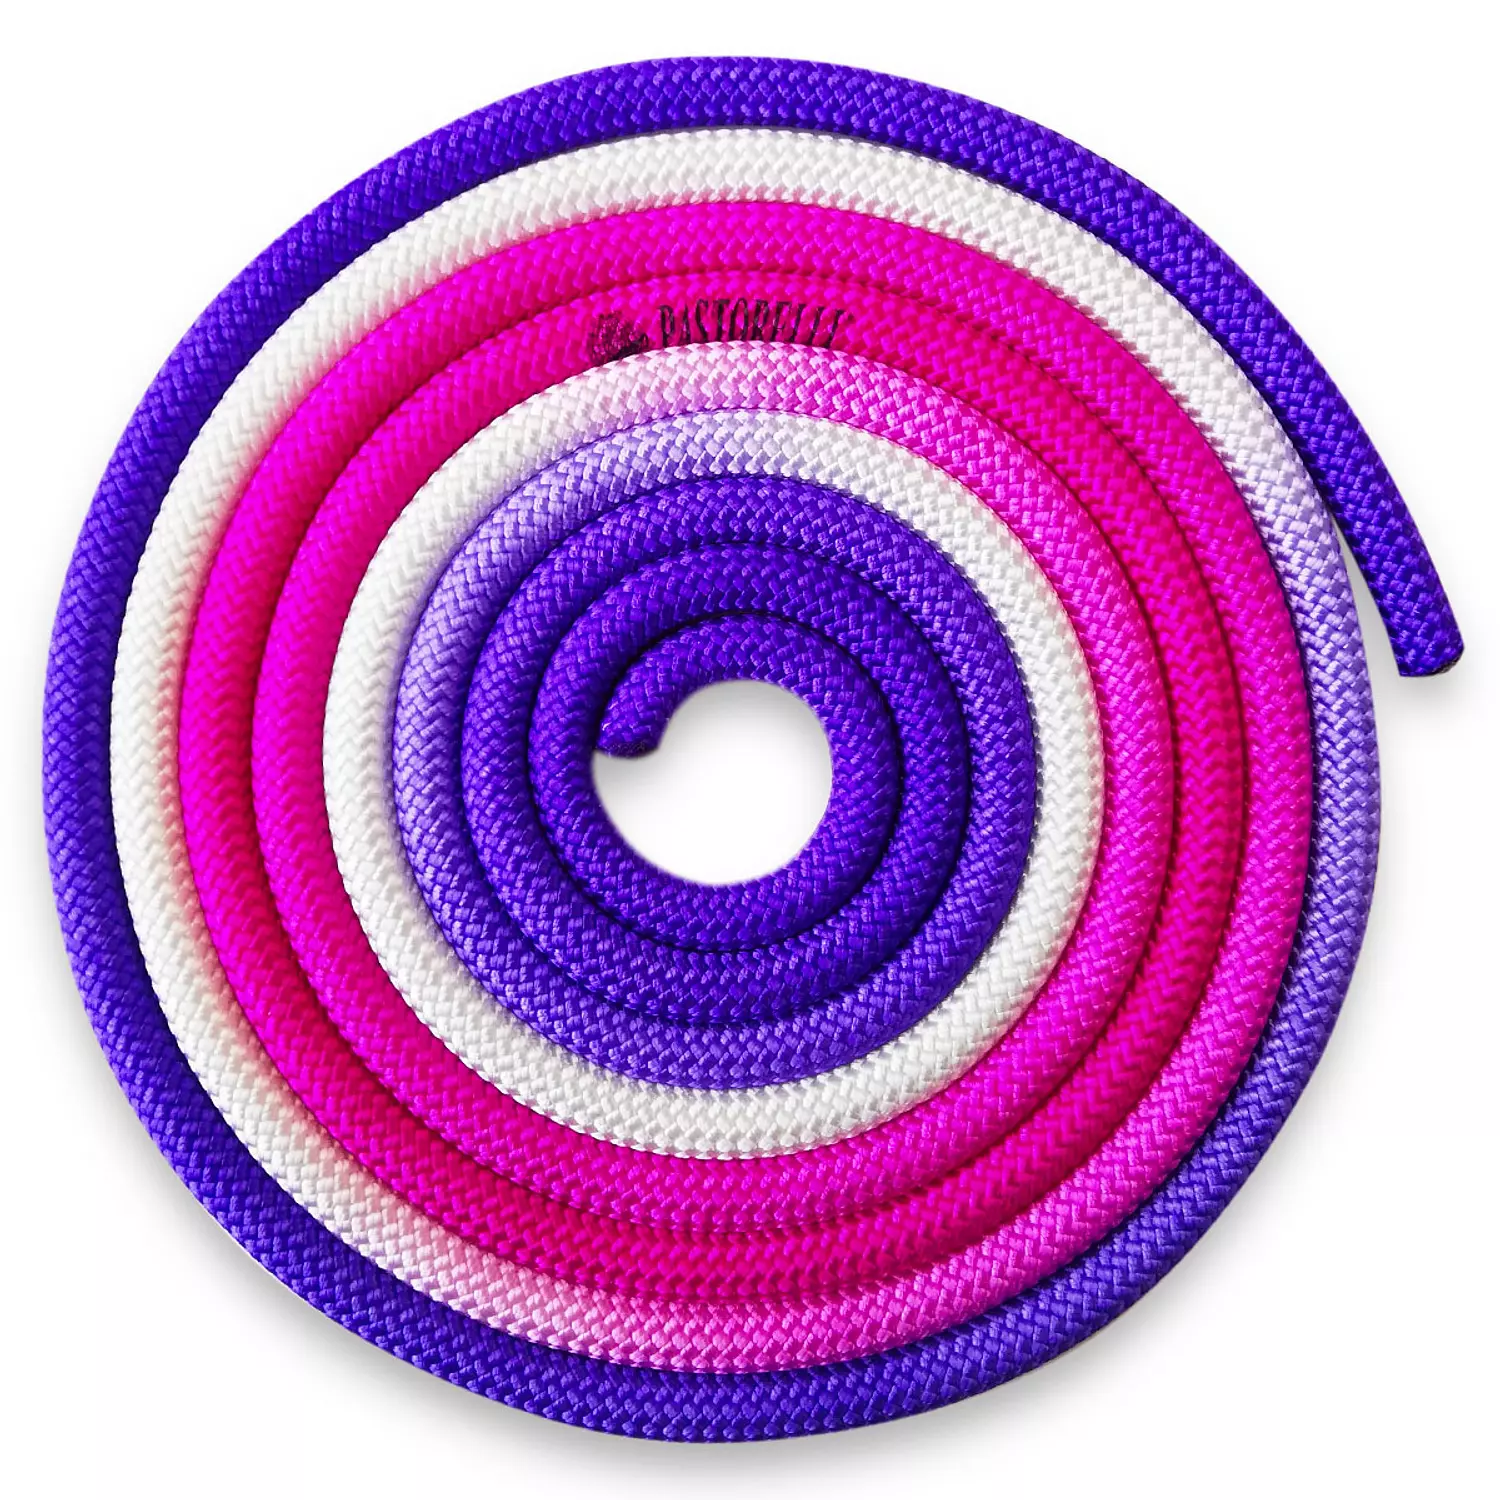 Pastorelli-New Orleans multicolor rope FIG | 3m 7